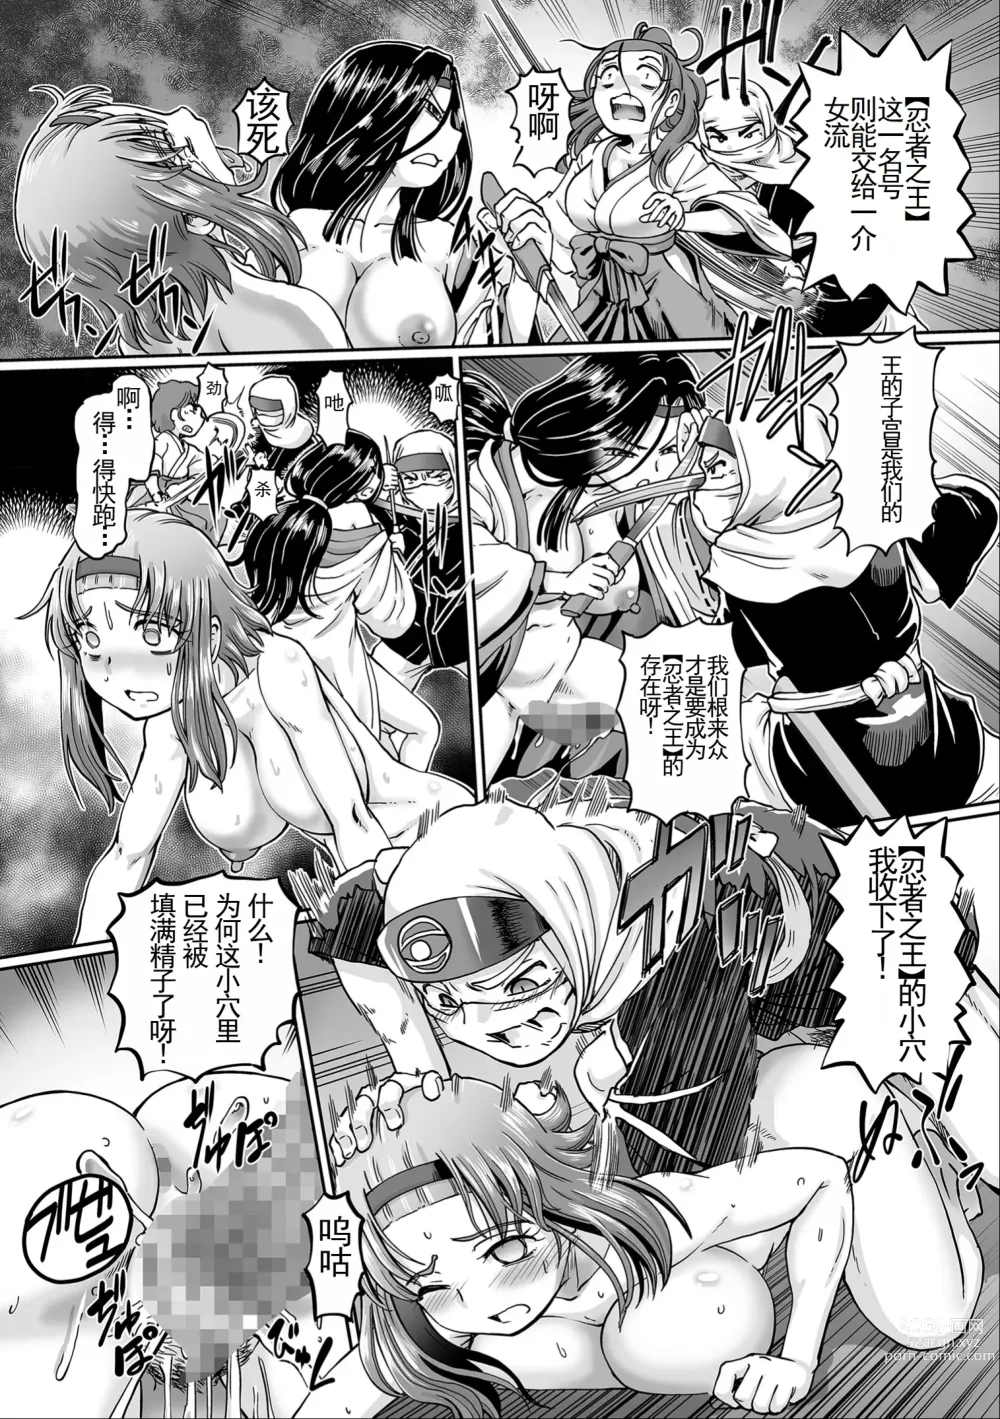 Page 187 of manga JK Ninja Marimo Ninpouchou